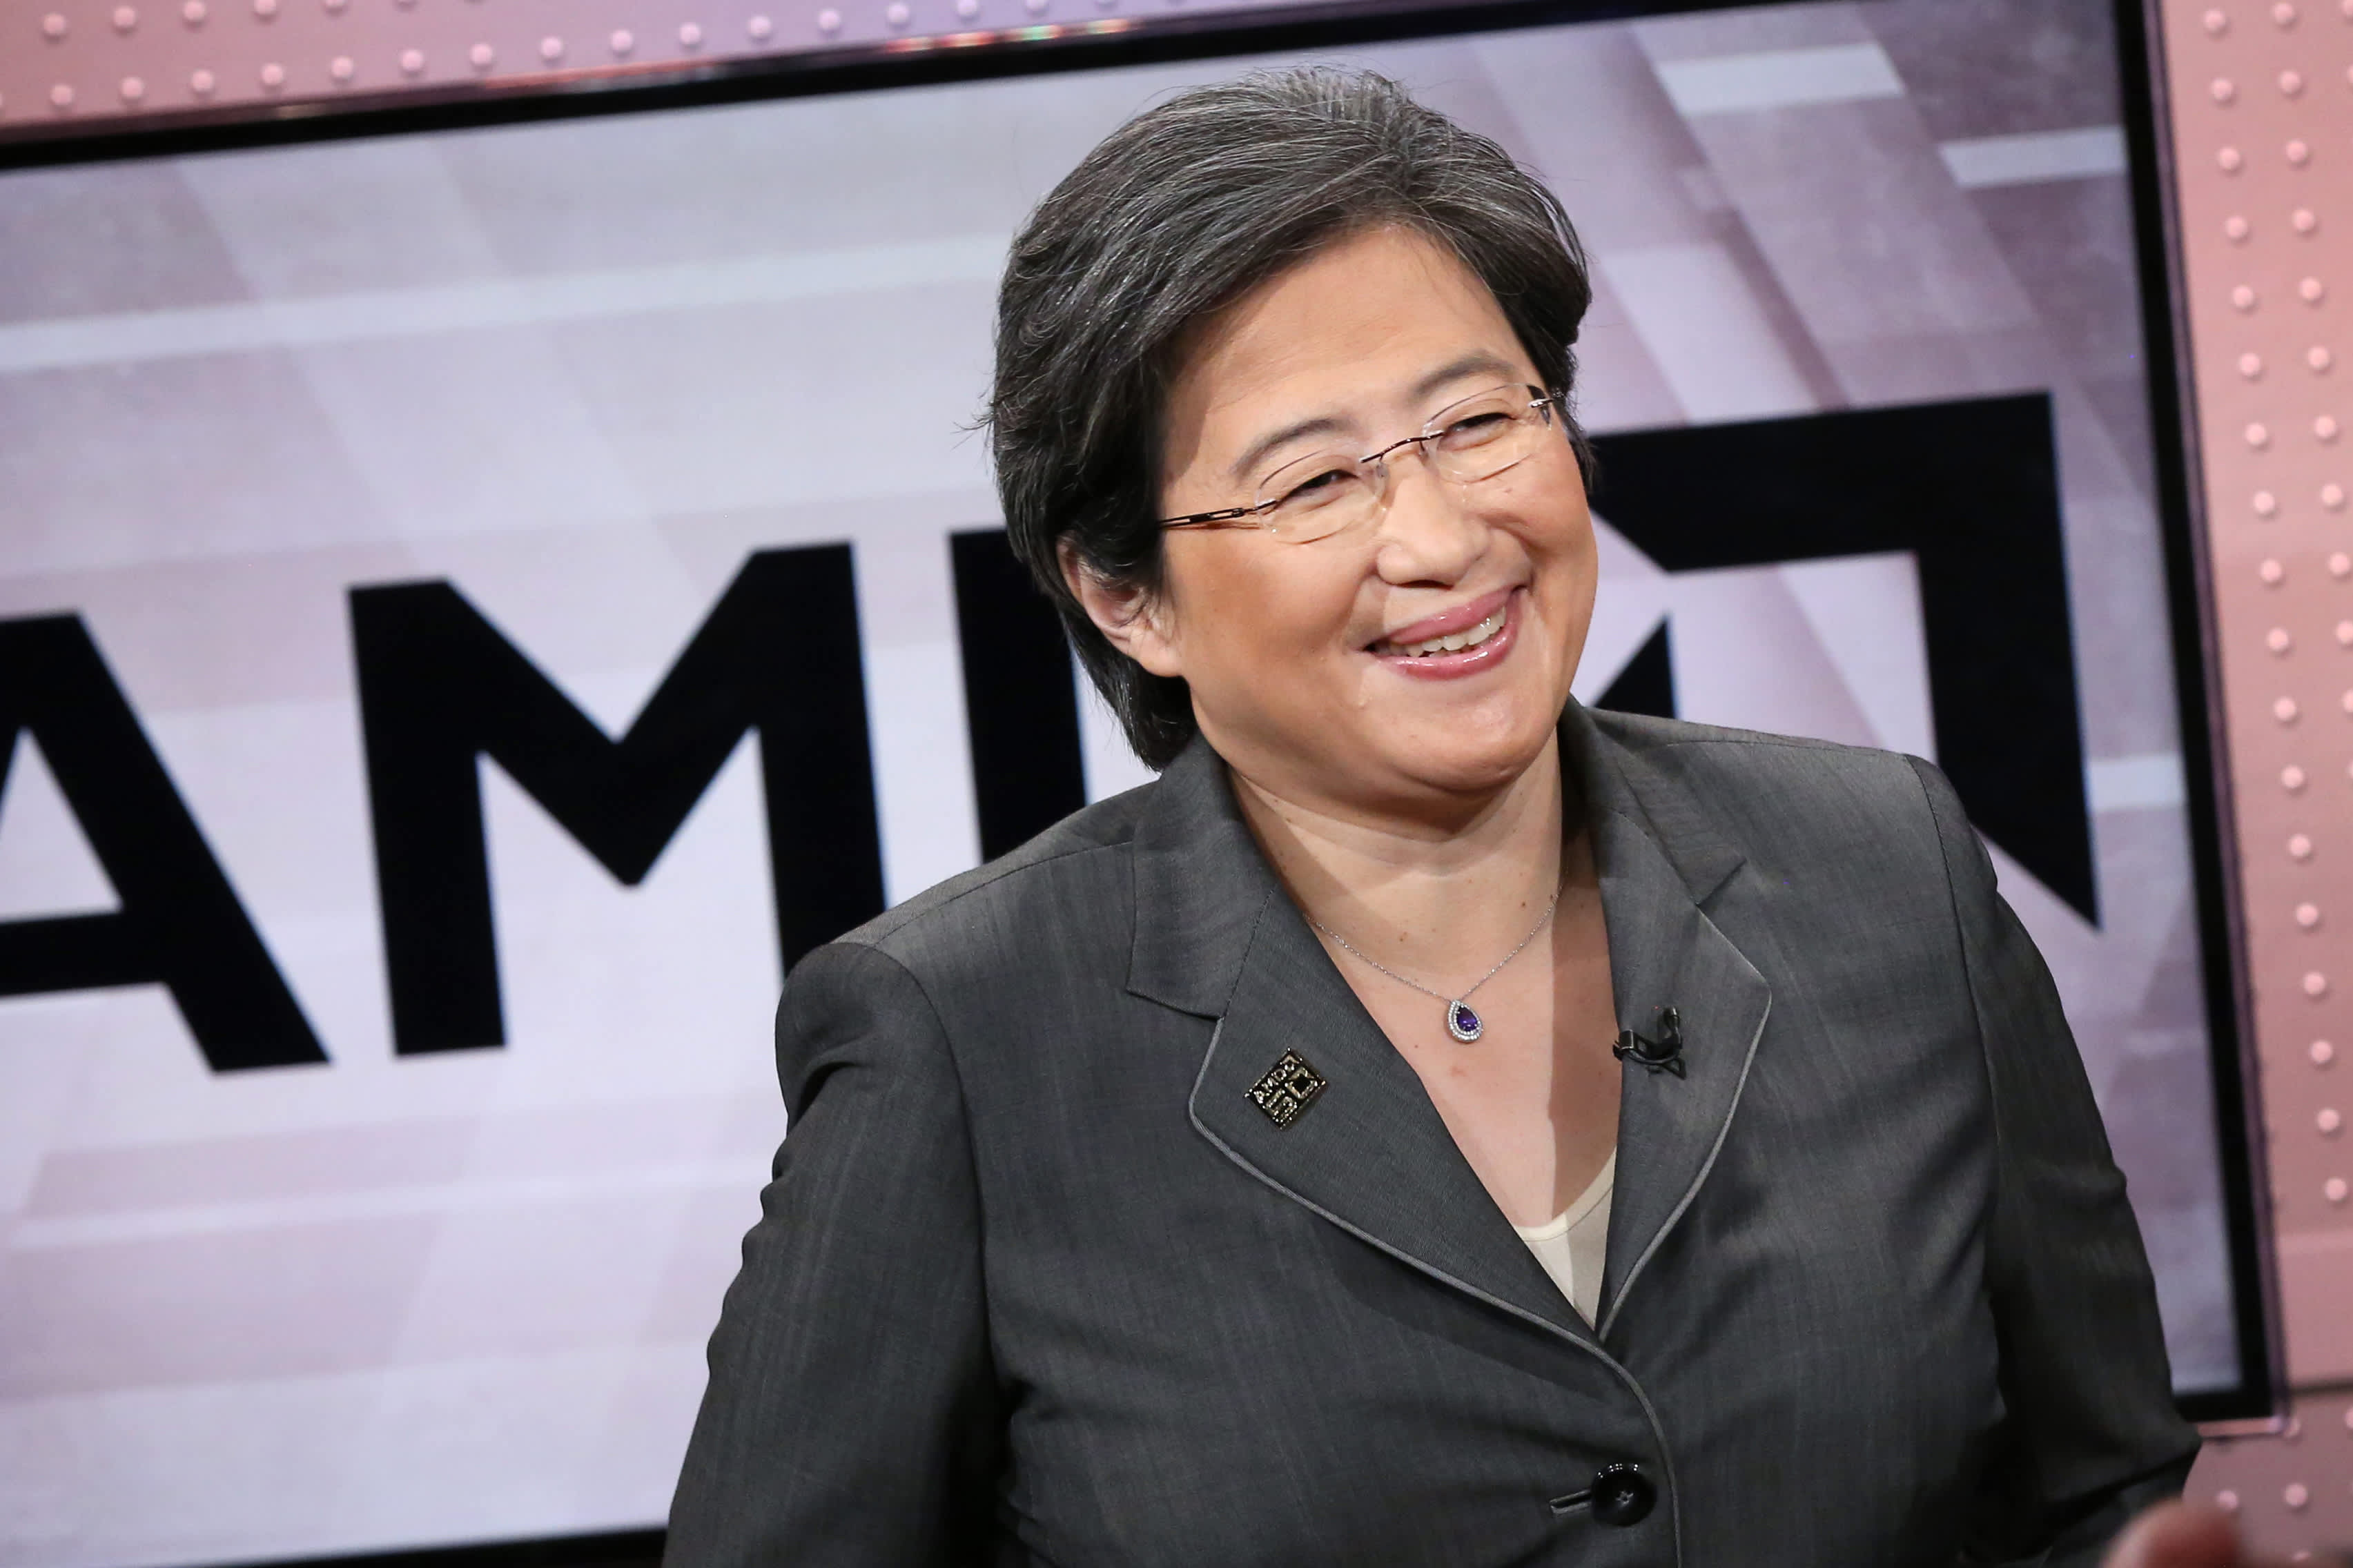 Intel turmoil creates buying opportunity at AMD, says Jim Cramer